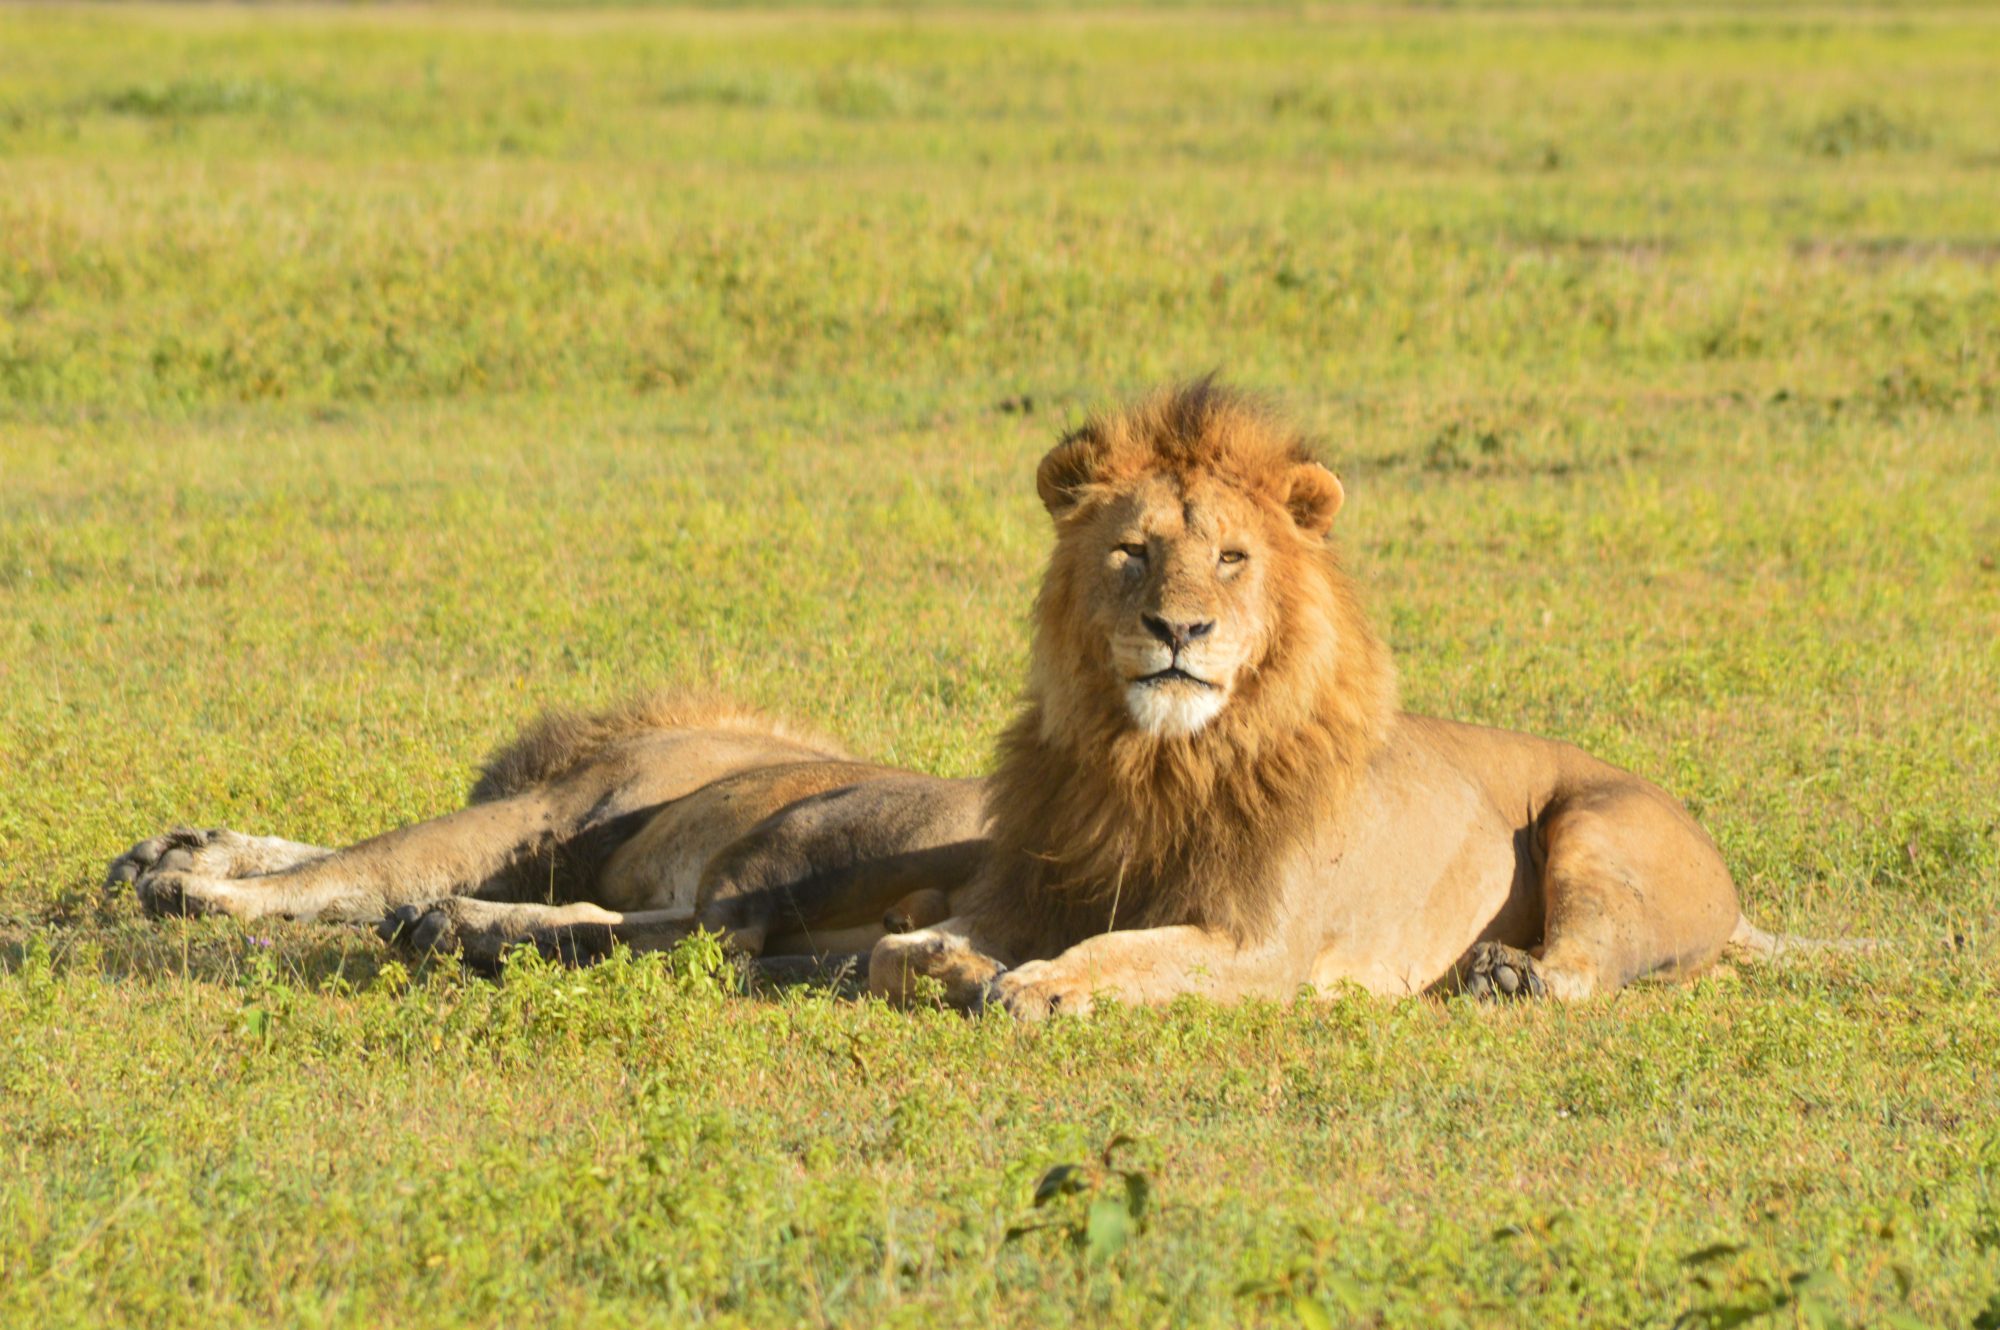 Ngorongoro Lions